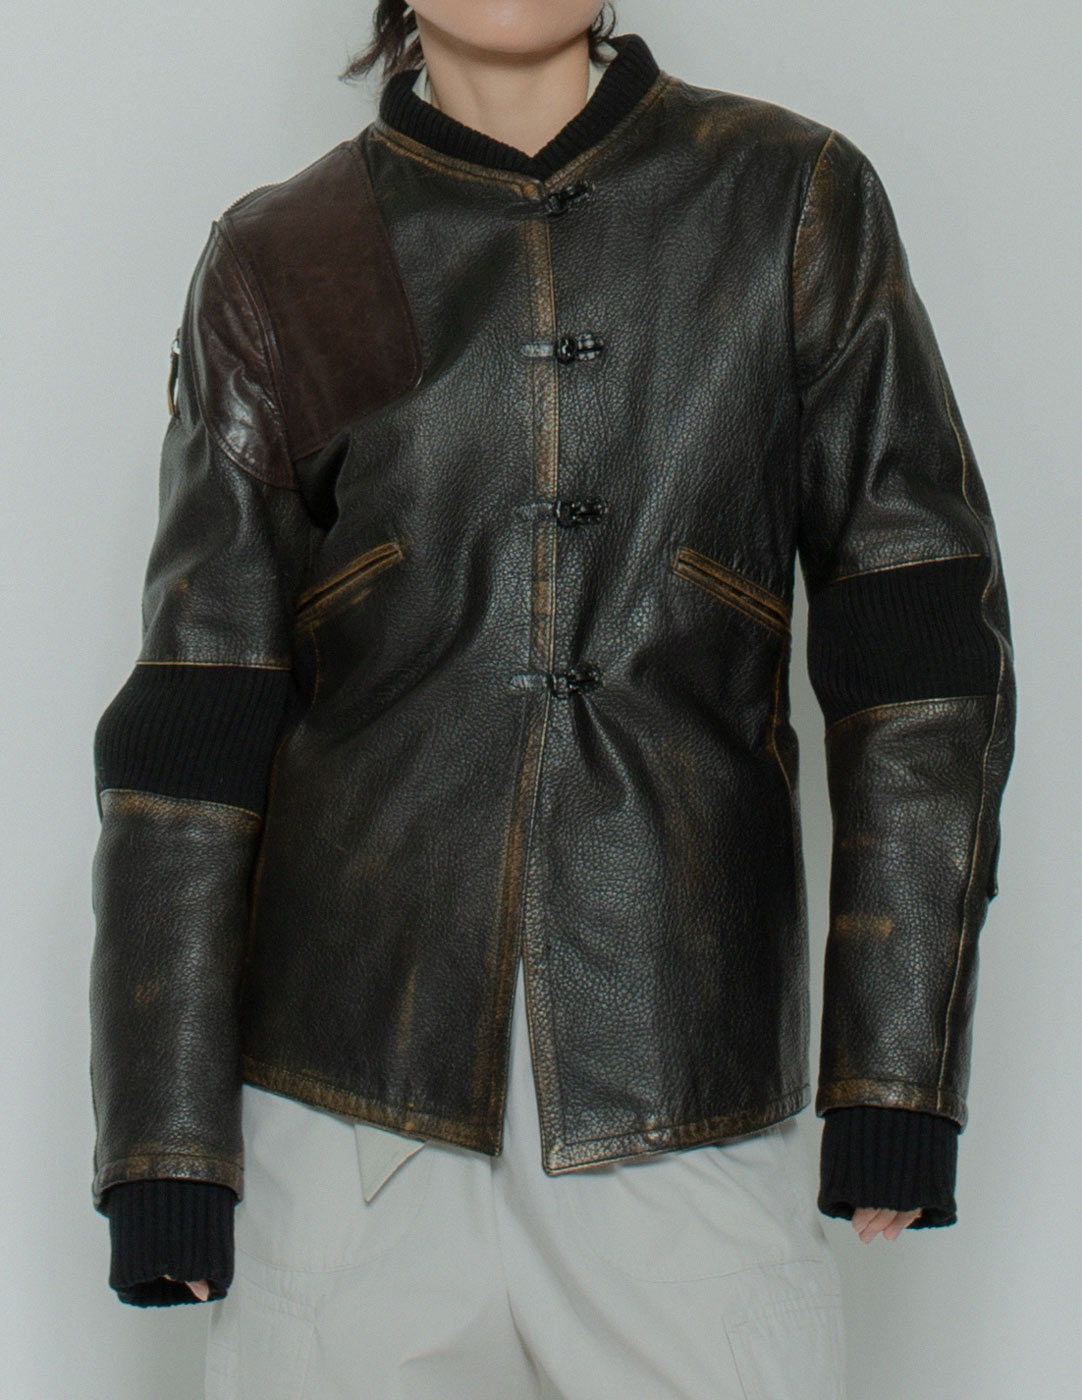 Jean Paul Gaultier vintage moto leather jacket front detail